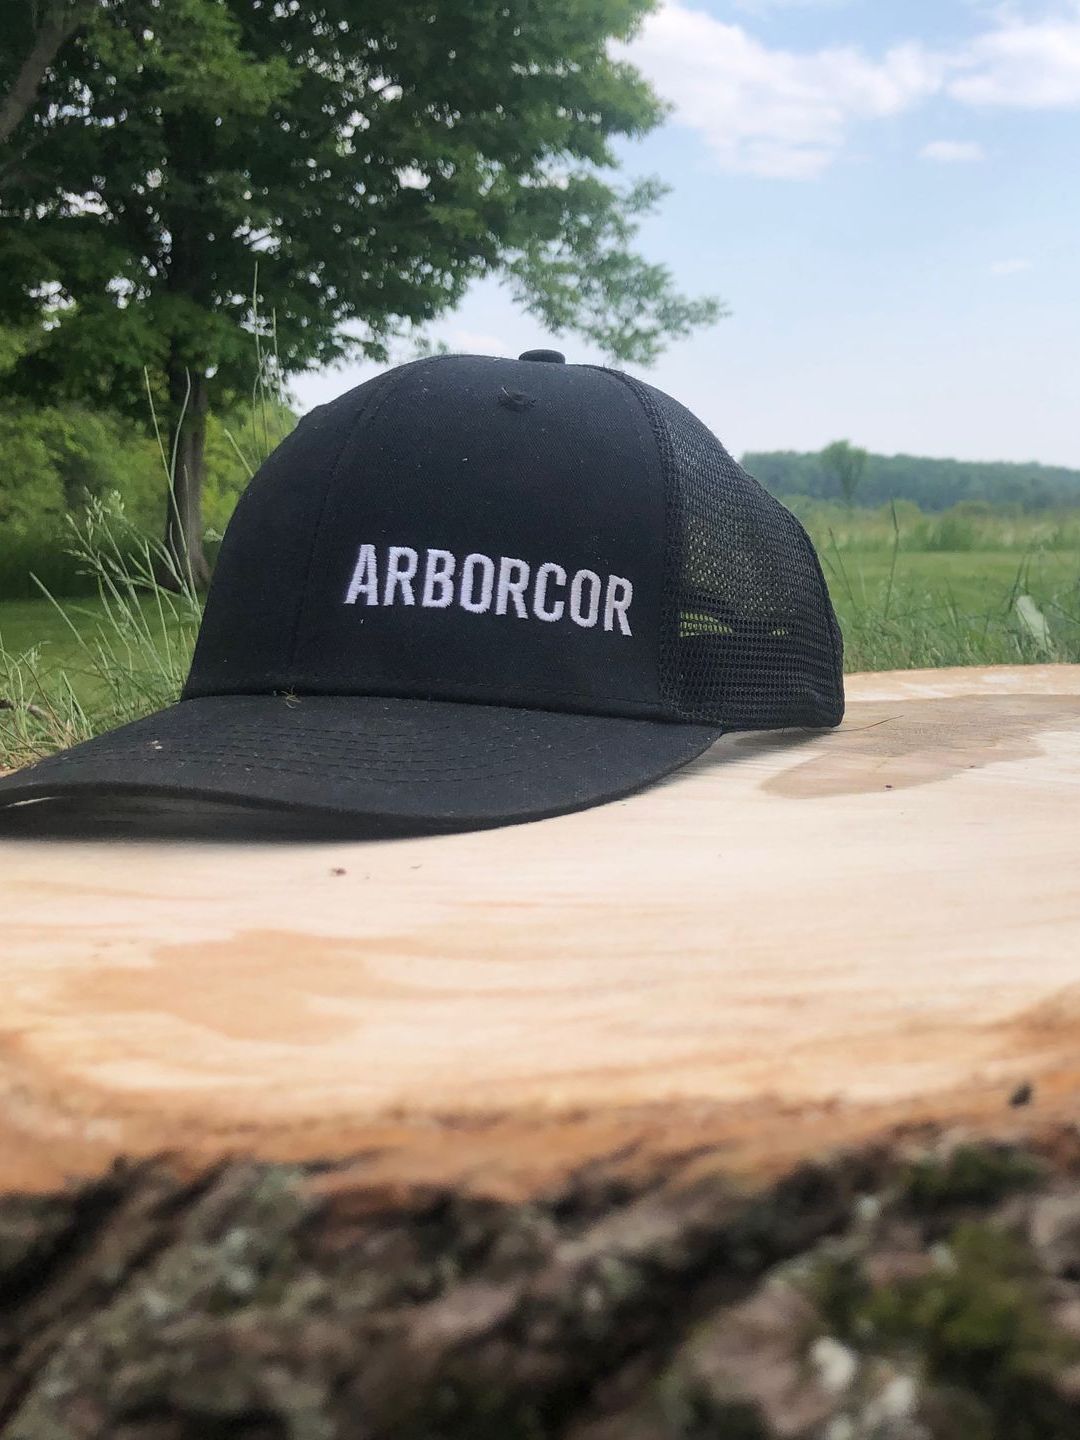 Arborcor provides expert tree trimming